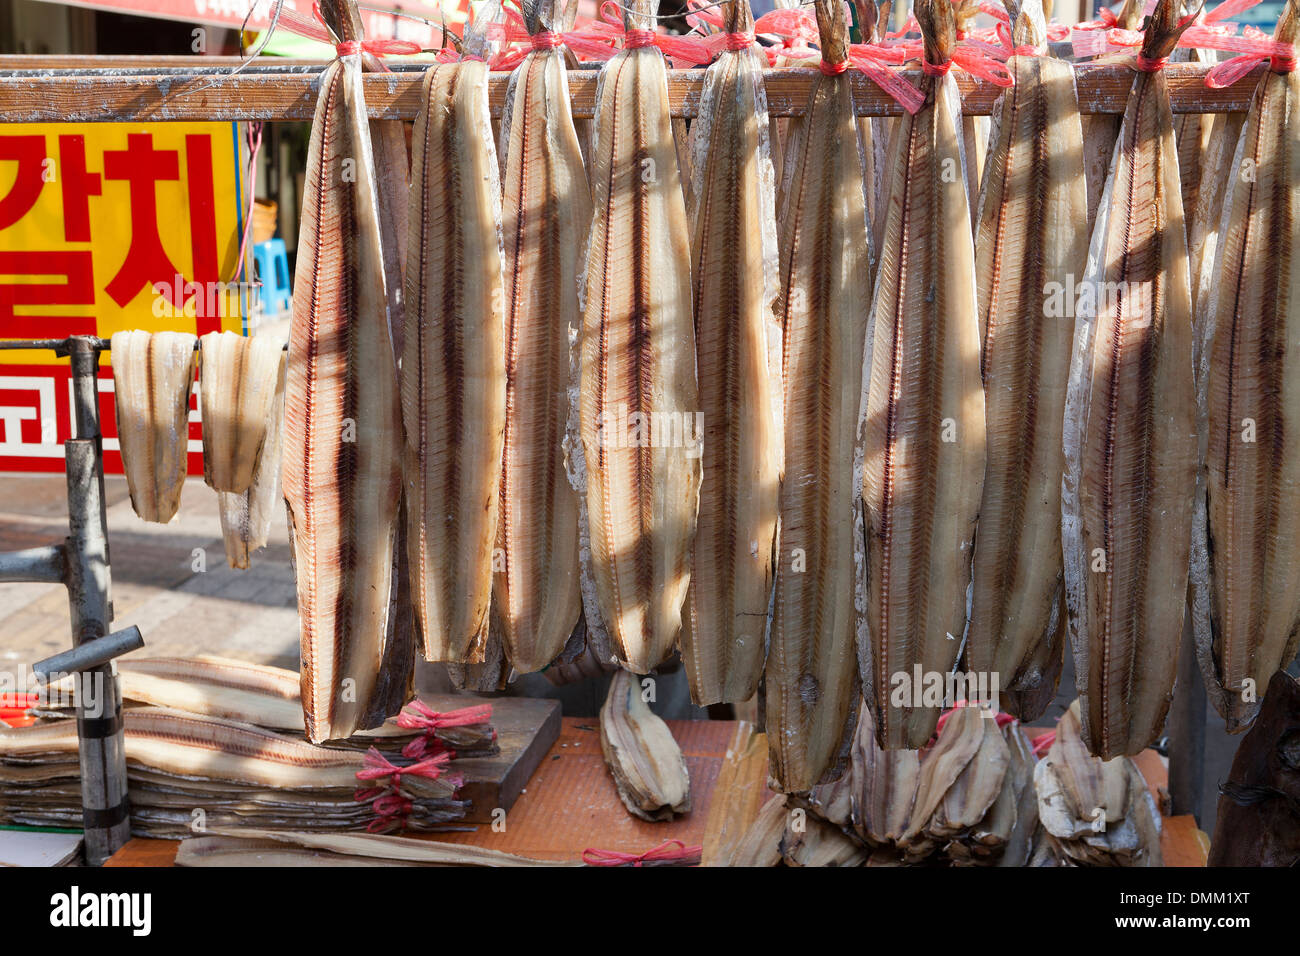 Verrundete Kalchi (Largehead Delfins) trocknen in der Sonne am Jagalchi Shijang (traditionelle outdoor-Markt) - Busan, Südkorea Stockfoto